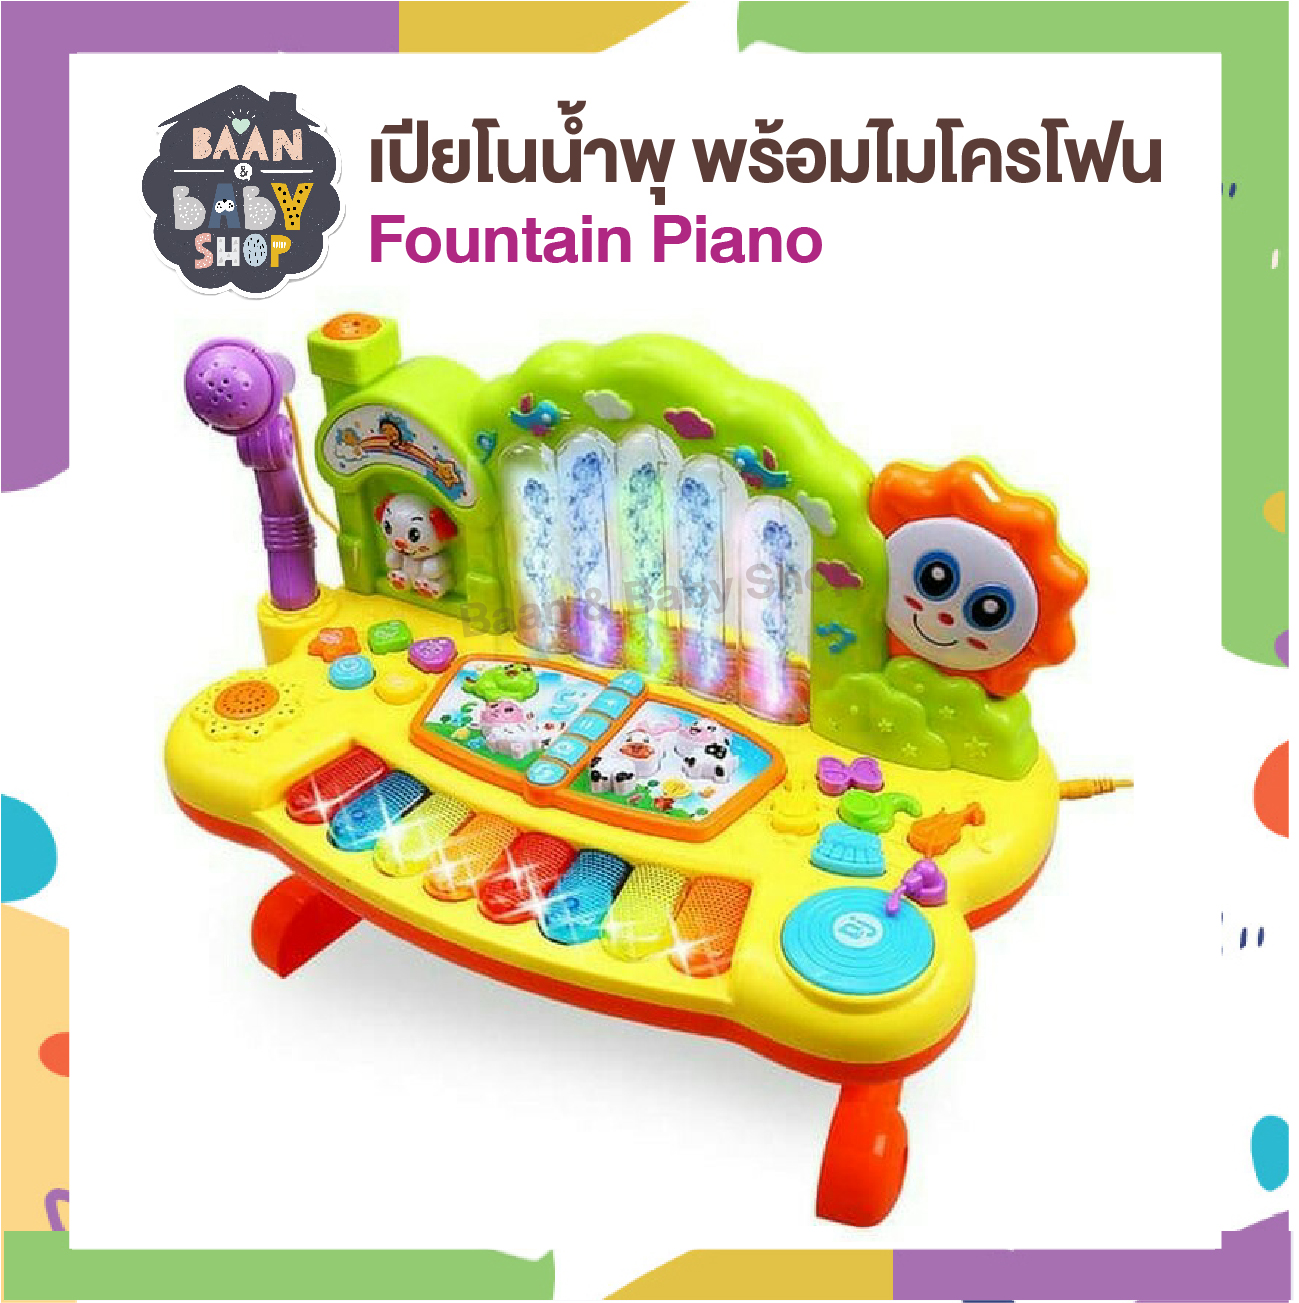 Baan & Baby Shop เปียโนน้ำพุ พร้อมไมโครโฟน คีย์บอร์ด ออร์แกนสำหรับเด็ก เครื่องดนตรีไฟฟ้าสำหรับเด็ก DJ Fountain Piano Musical Piano Keyboard Piano music toys for Kids toddlers